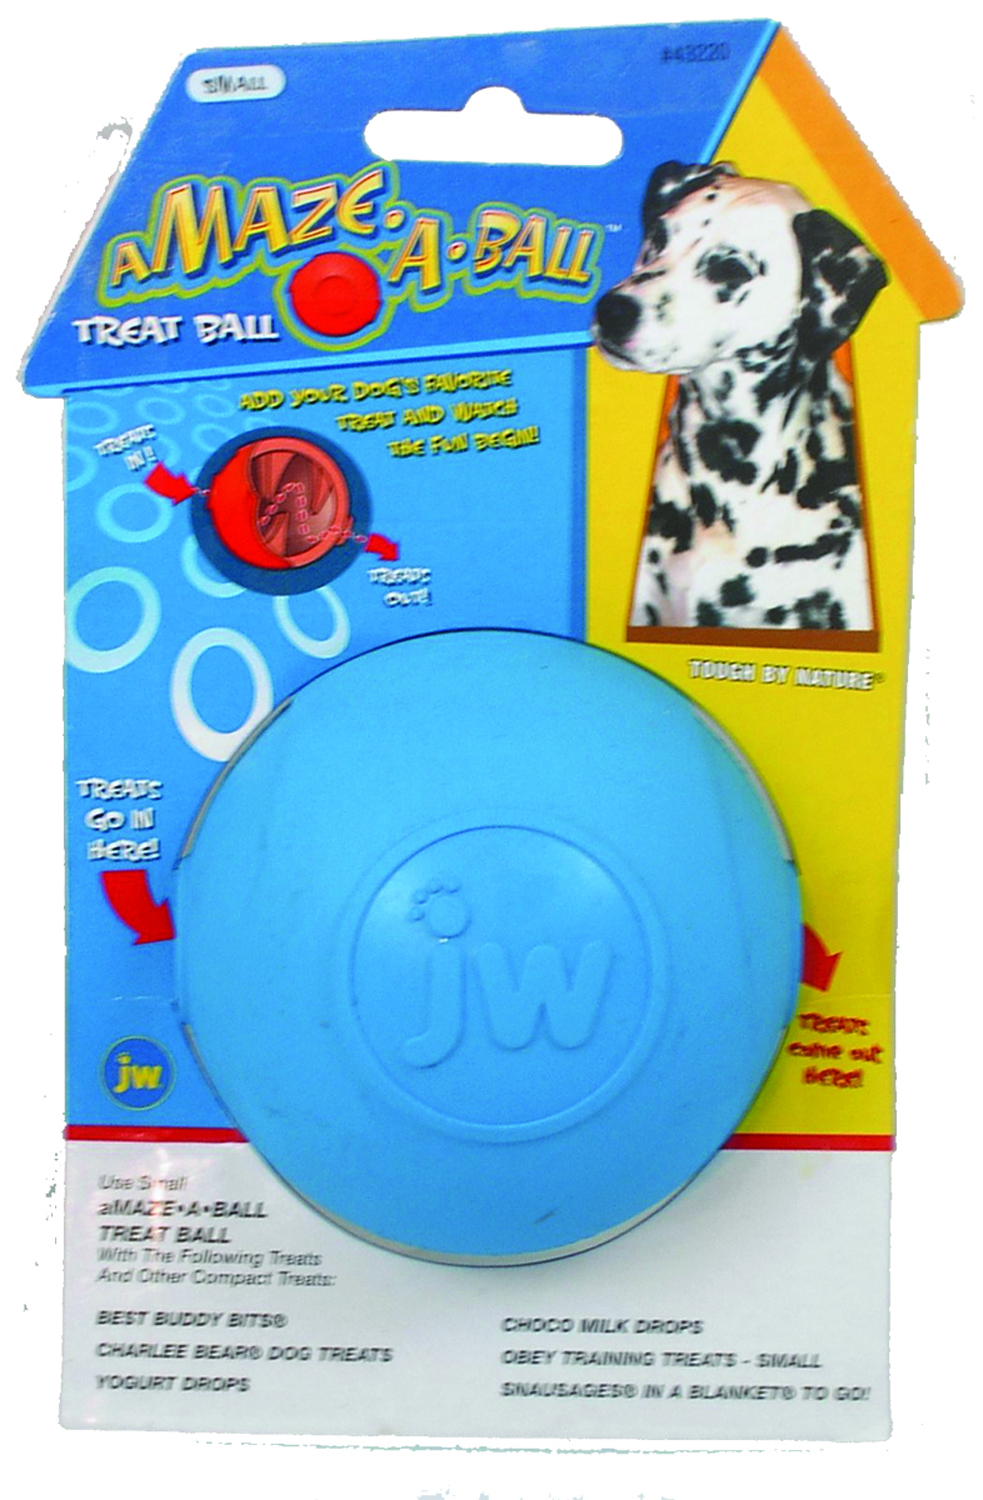 Small amaze-a-ball dog toy